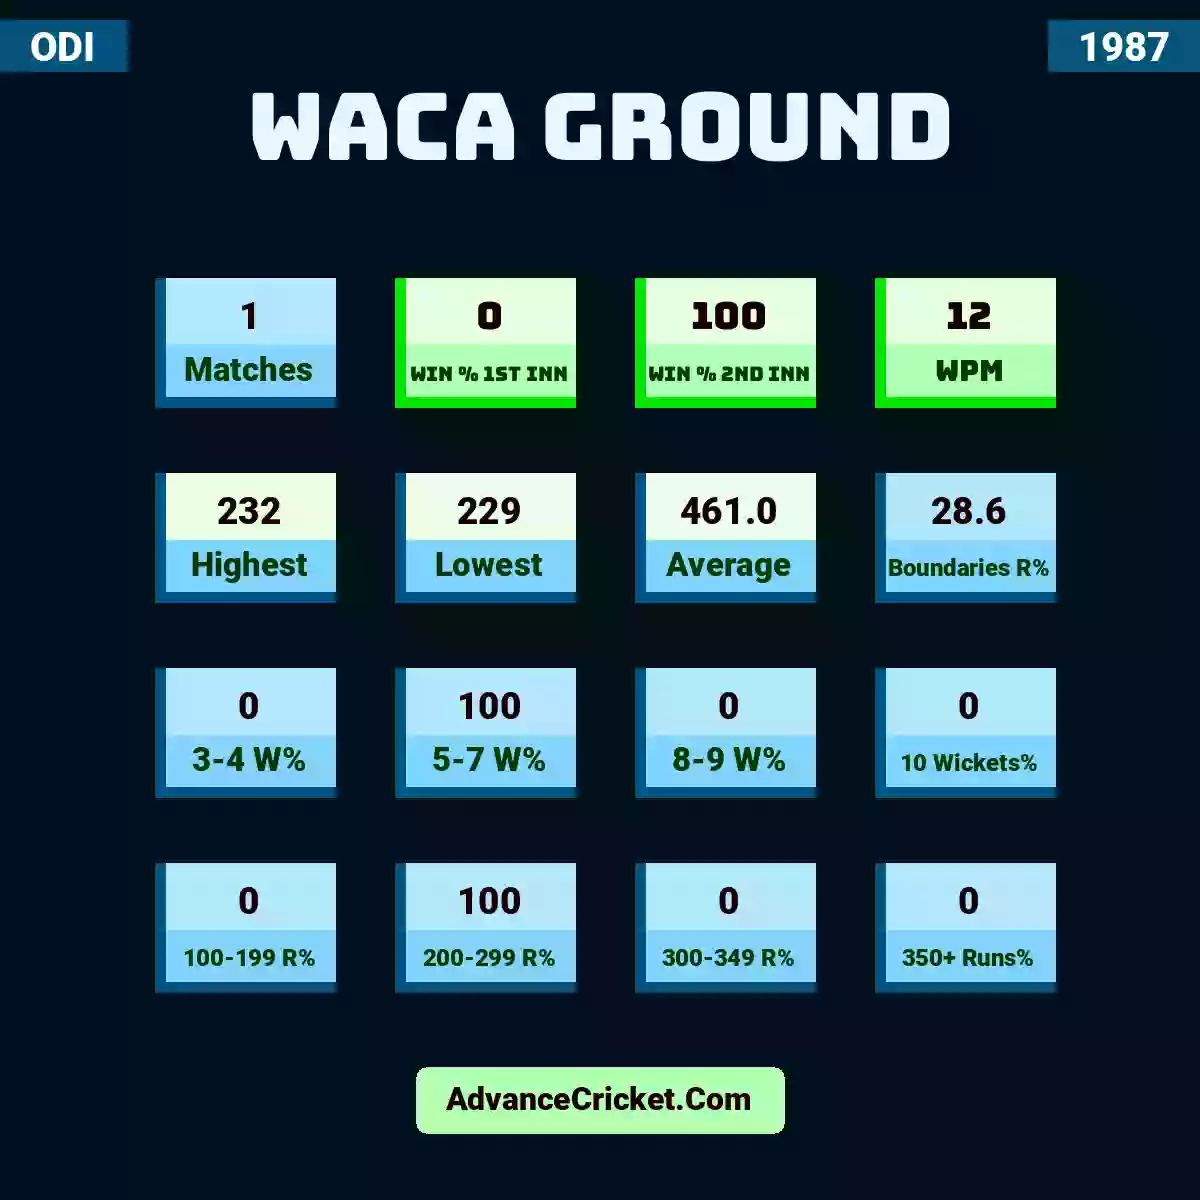 Image showing WACA Ground with Matches: 1, Win % 1st Inn: 0, Win % 2nd Inn: 100, WPM: 12, Highest: 232, Lowest: 229, Average: 461.0, Boundaries R%: 28.6, 3-4 W%: 0, 5-7 W%: 100, 8-9 W%: 0, 10 Wickets%: 0, 100-199 R%: 0, 200-299 R%: 100, 300-349 R%: 0, 350+ Runs%: 0.